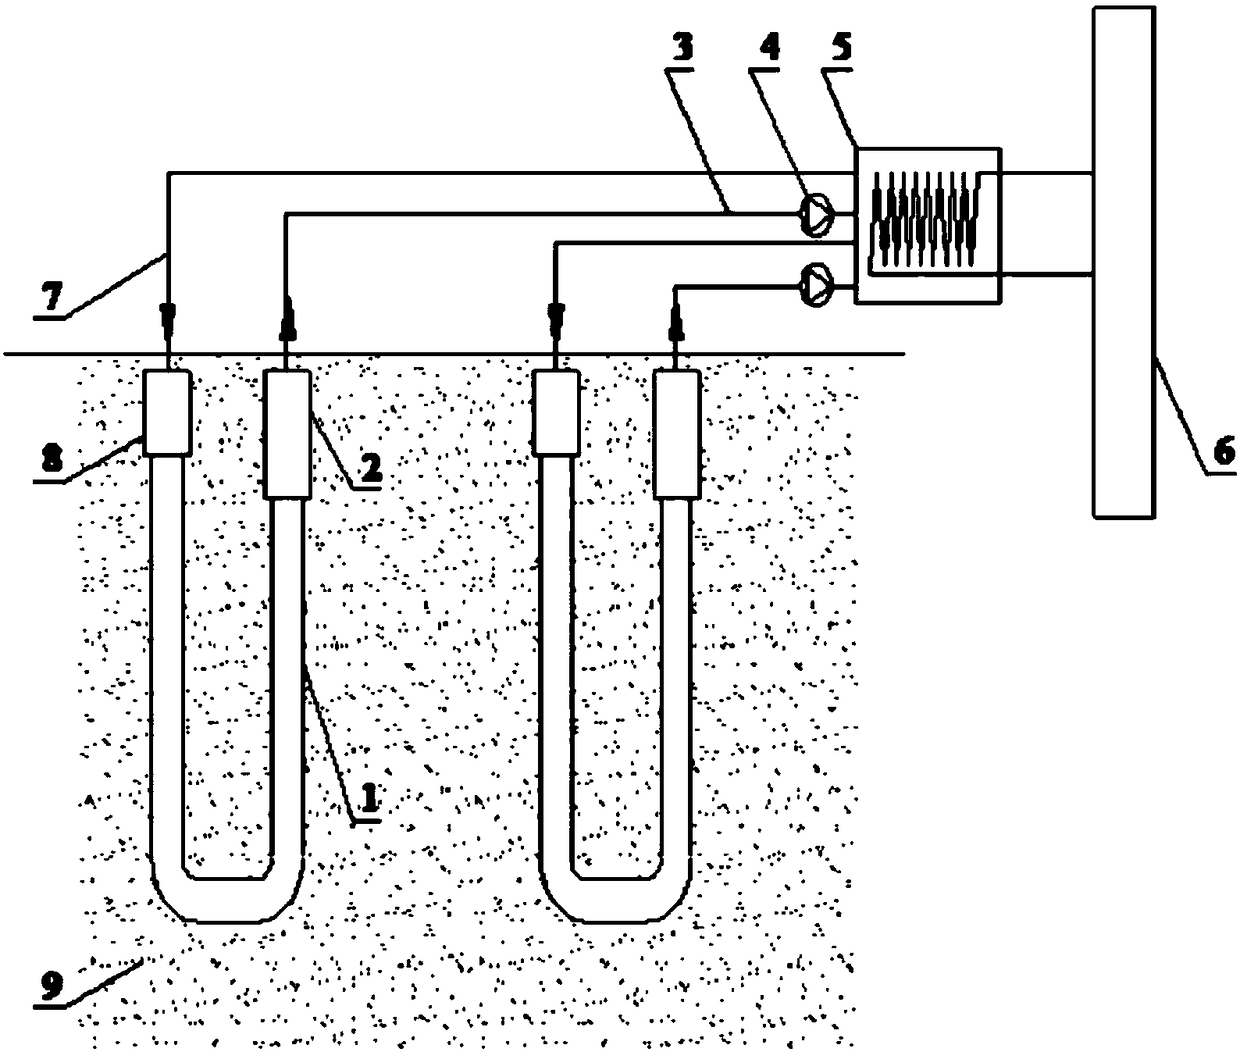 Geothermal energy heat exchange device